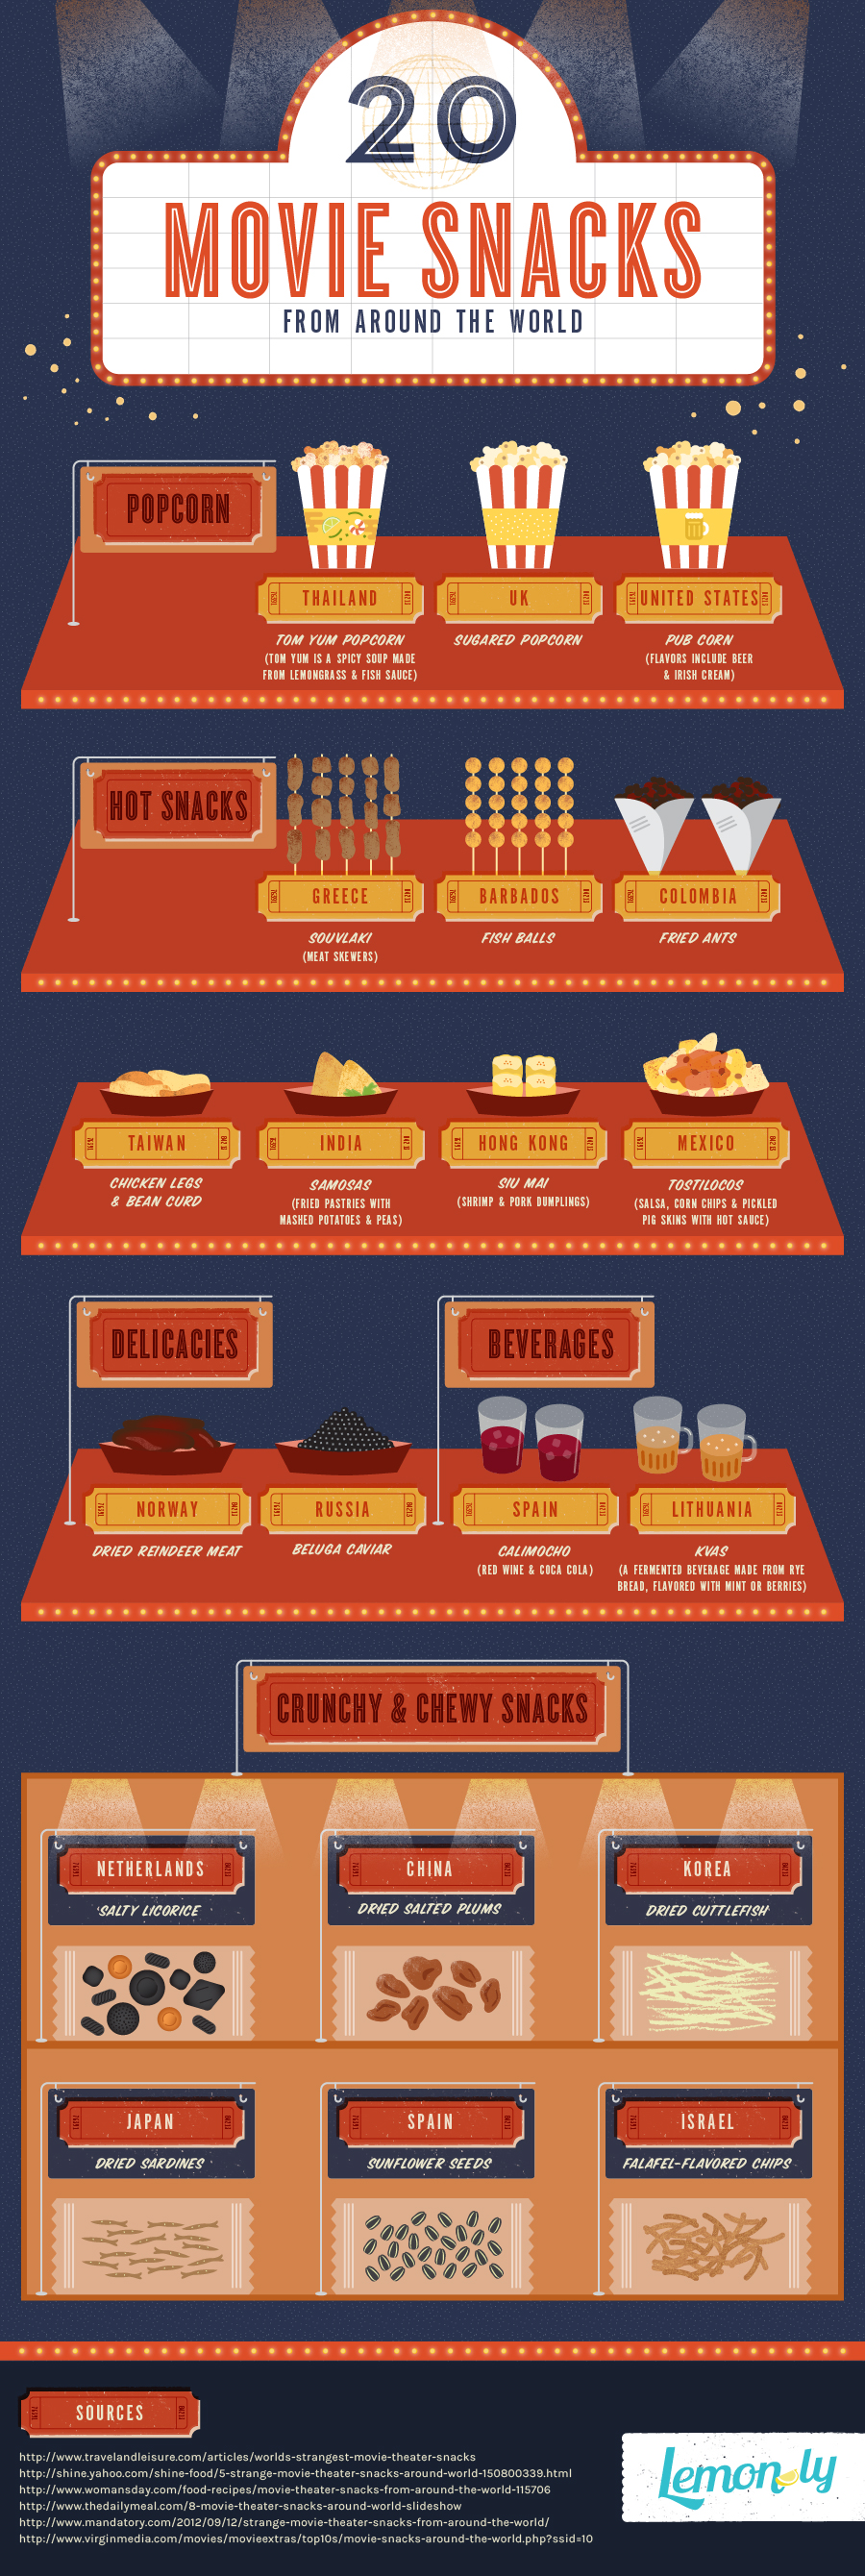 infographic bioscoop snacks